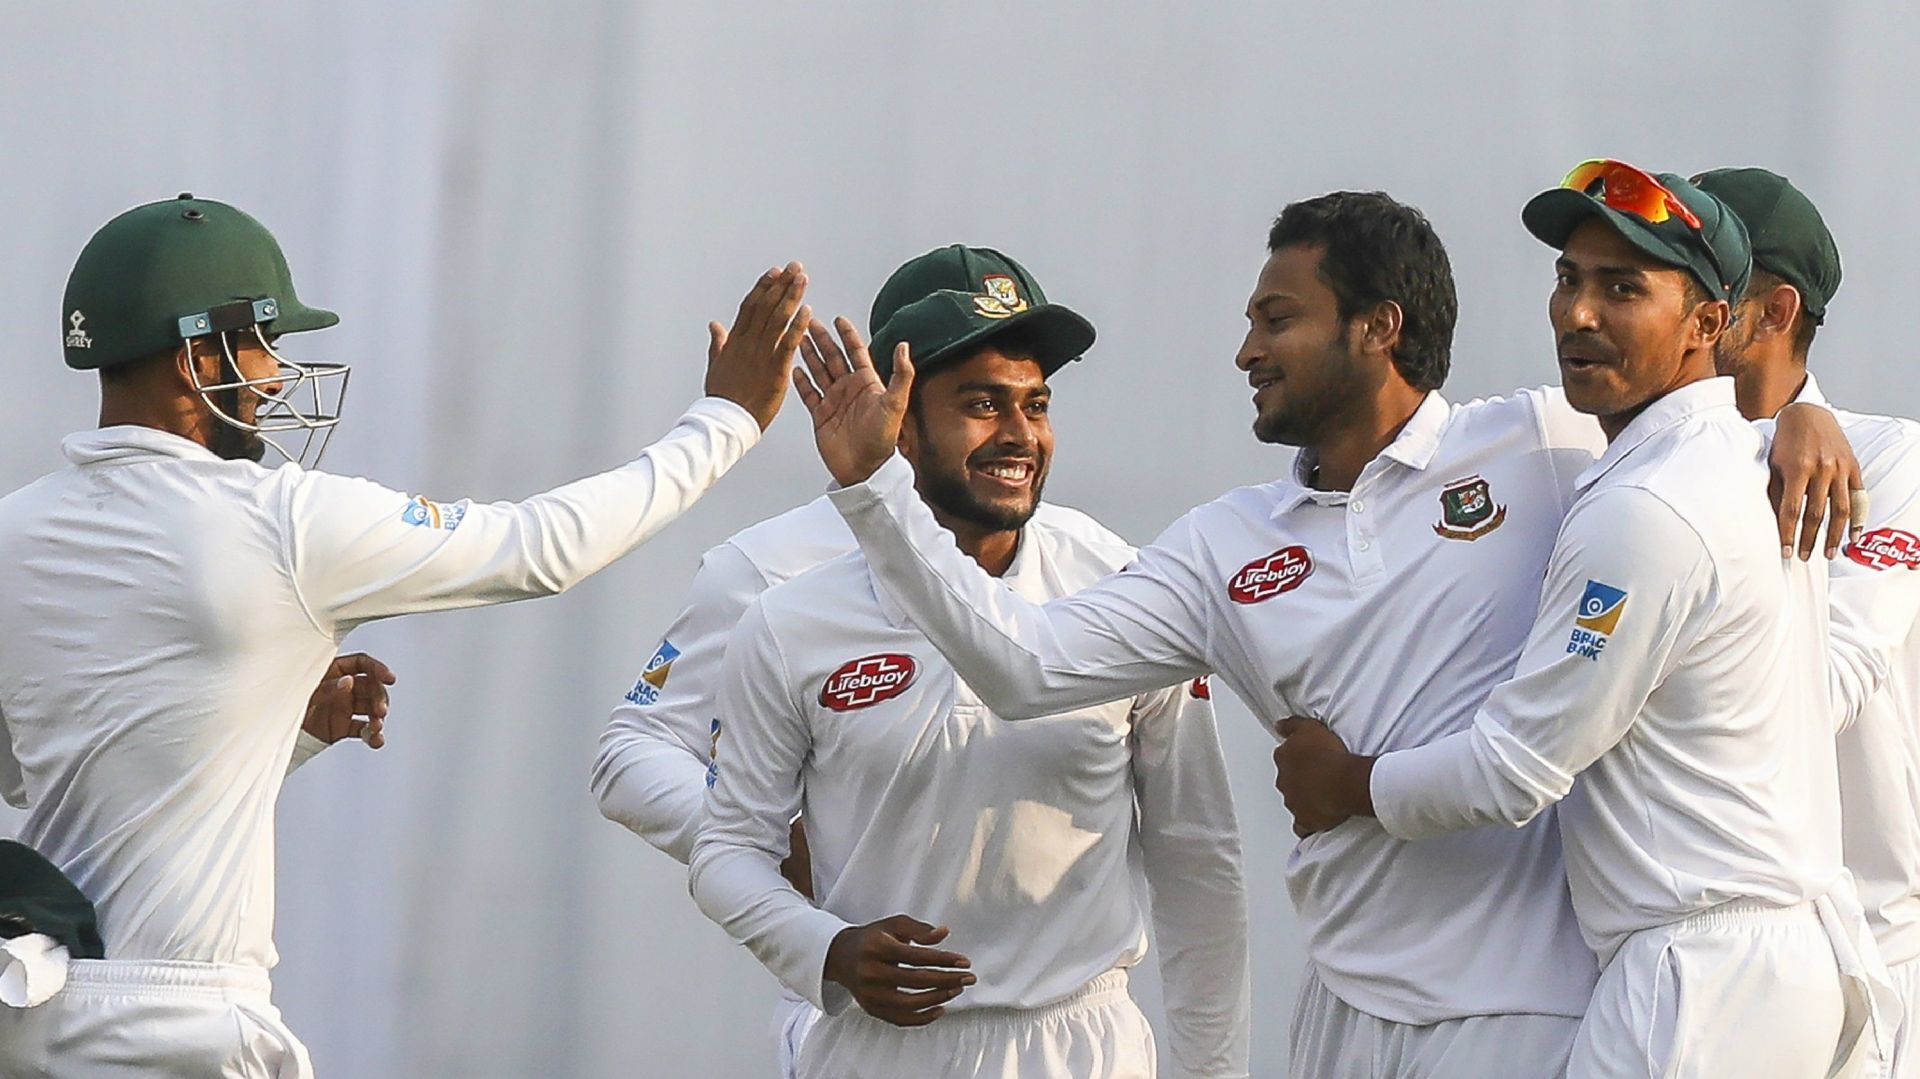 Shakib al Hasan celebrates a wicket with his teammates. (Image Credits: Getty)